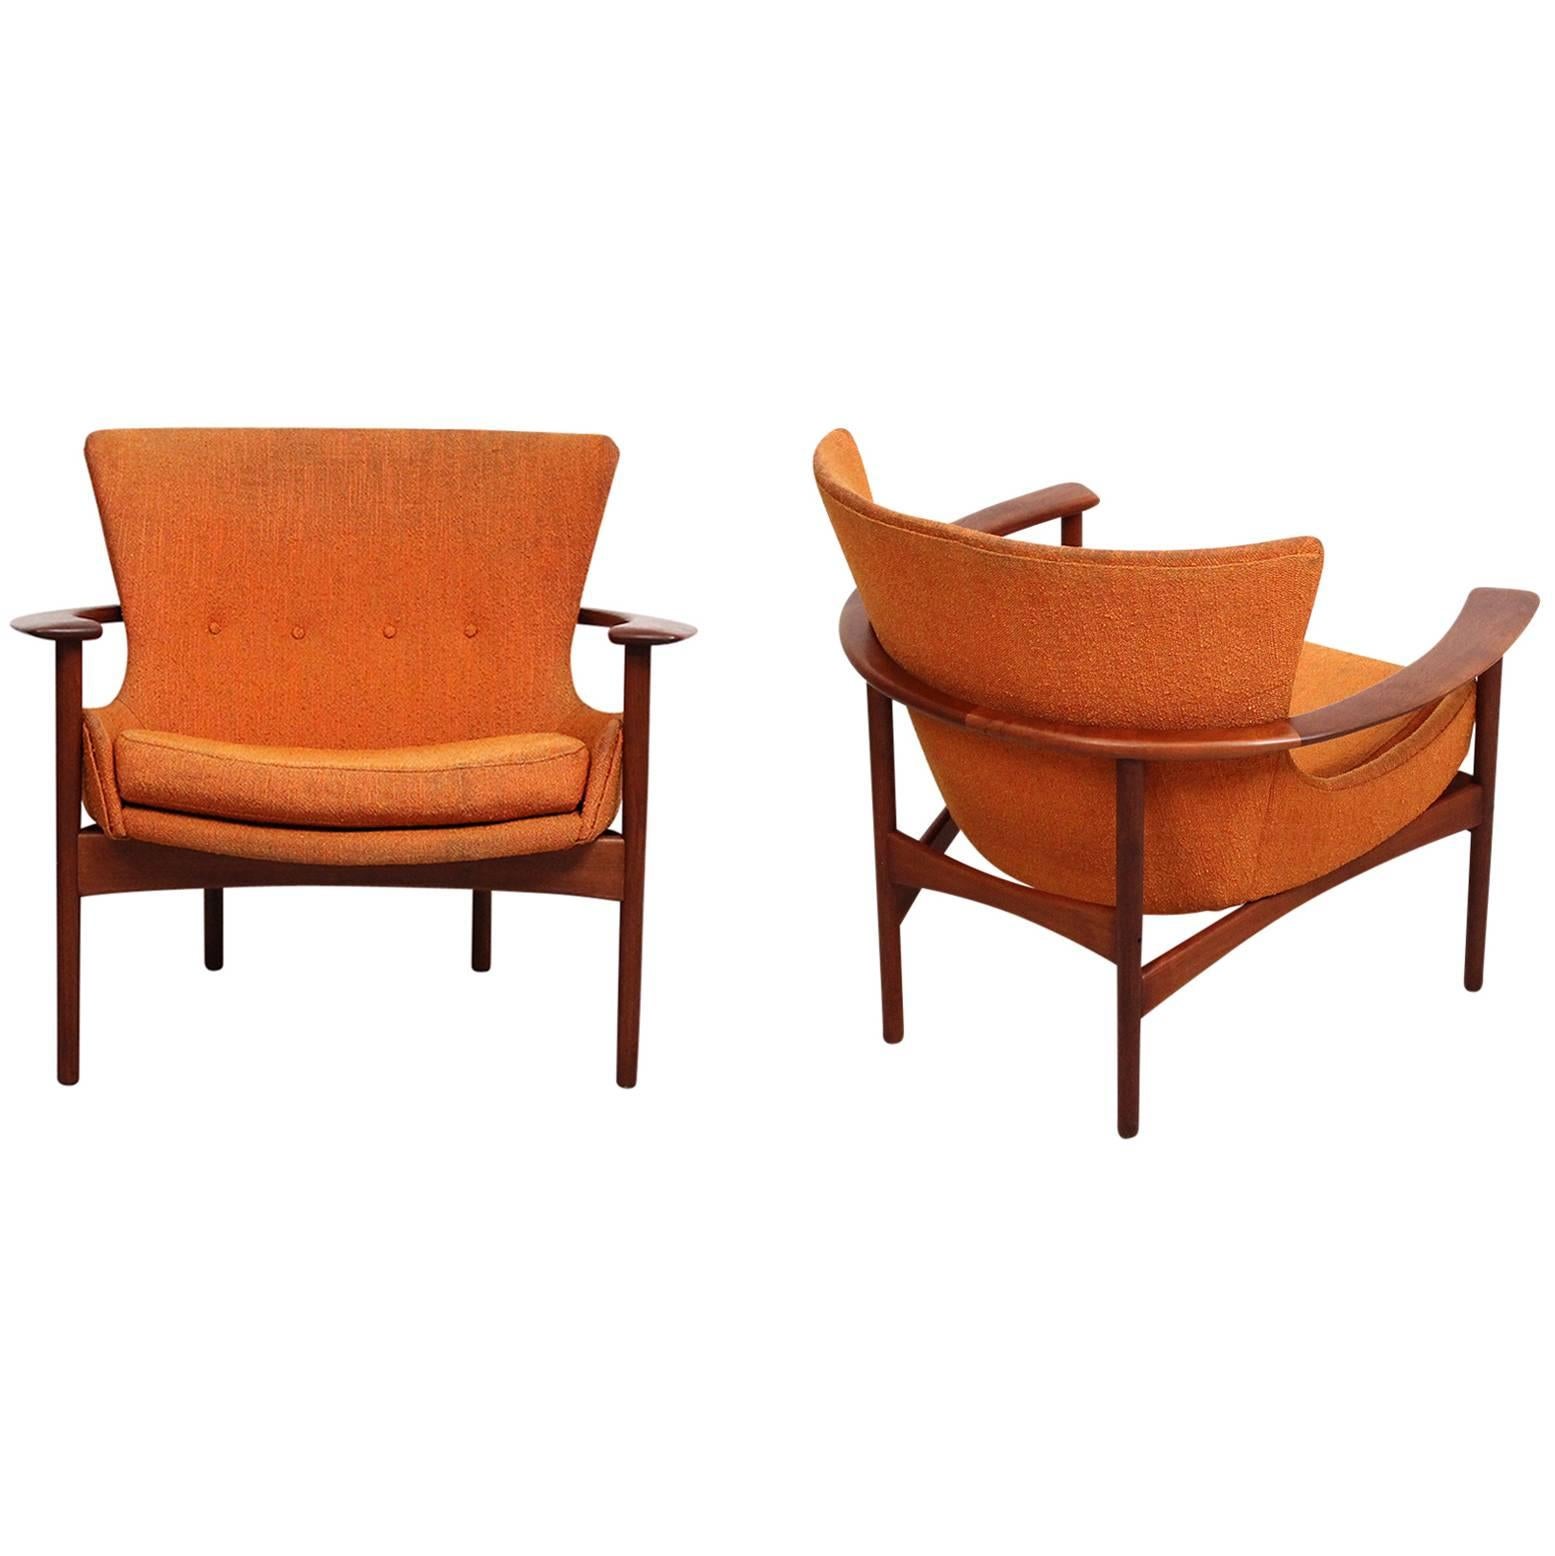 Pair of "Horseshoe" Lounge Chairs by Kofod-Larsen